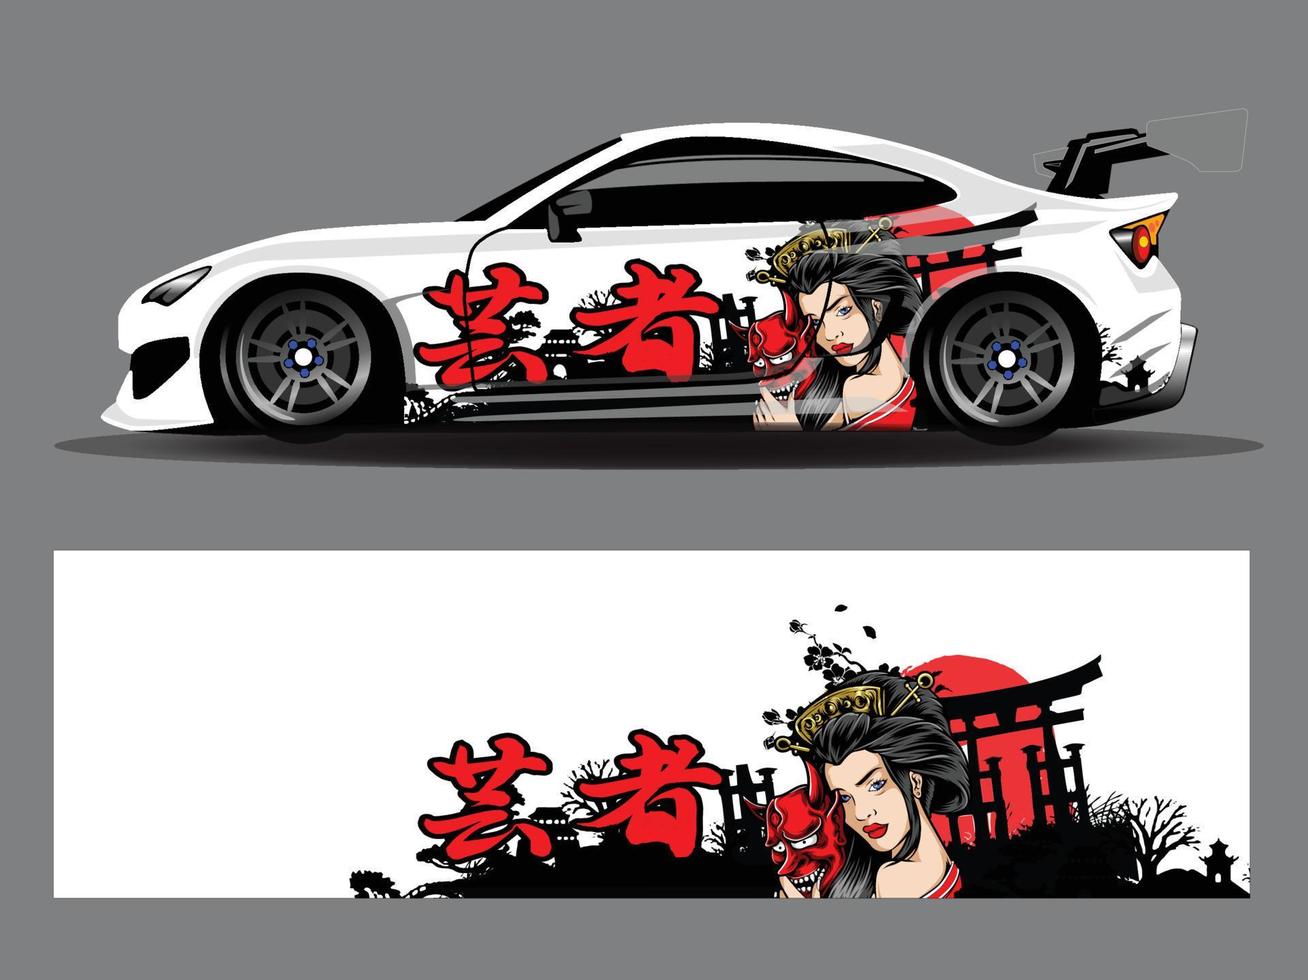 High School Dxd Anime Itasha Car Wrap Rear Car Stickers The Car Decal Car  Cartoon Creative Sticker Body Appearance Modification - Car Body Film -  AliExpress